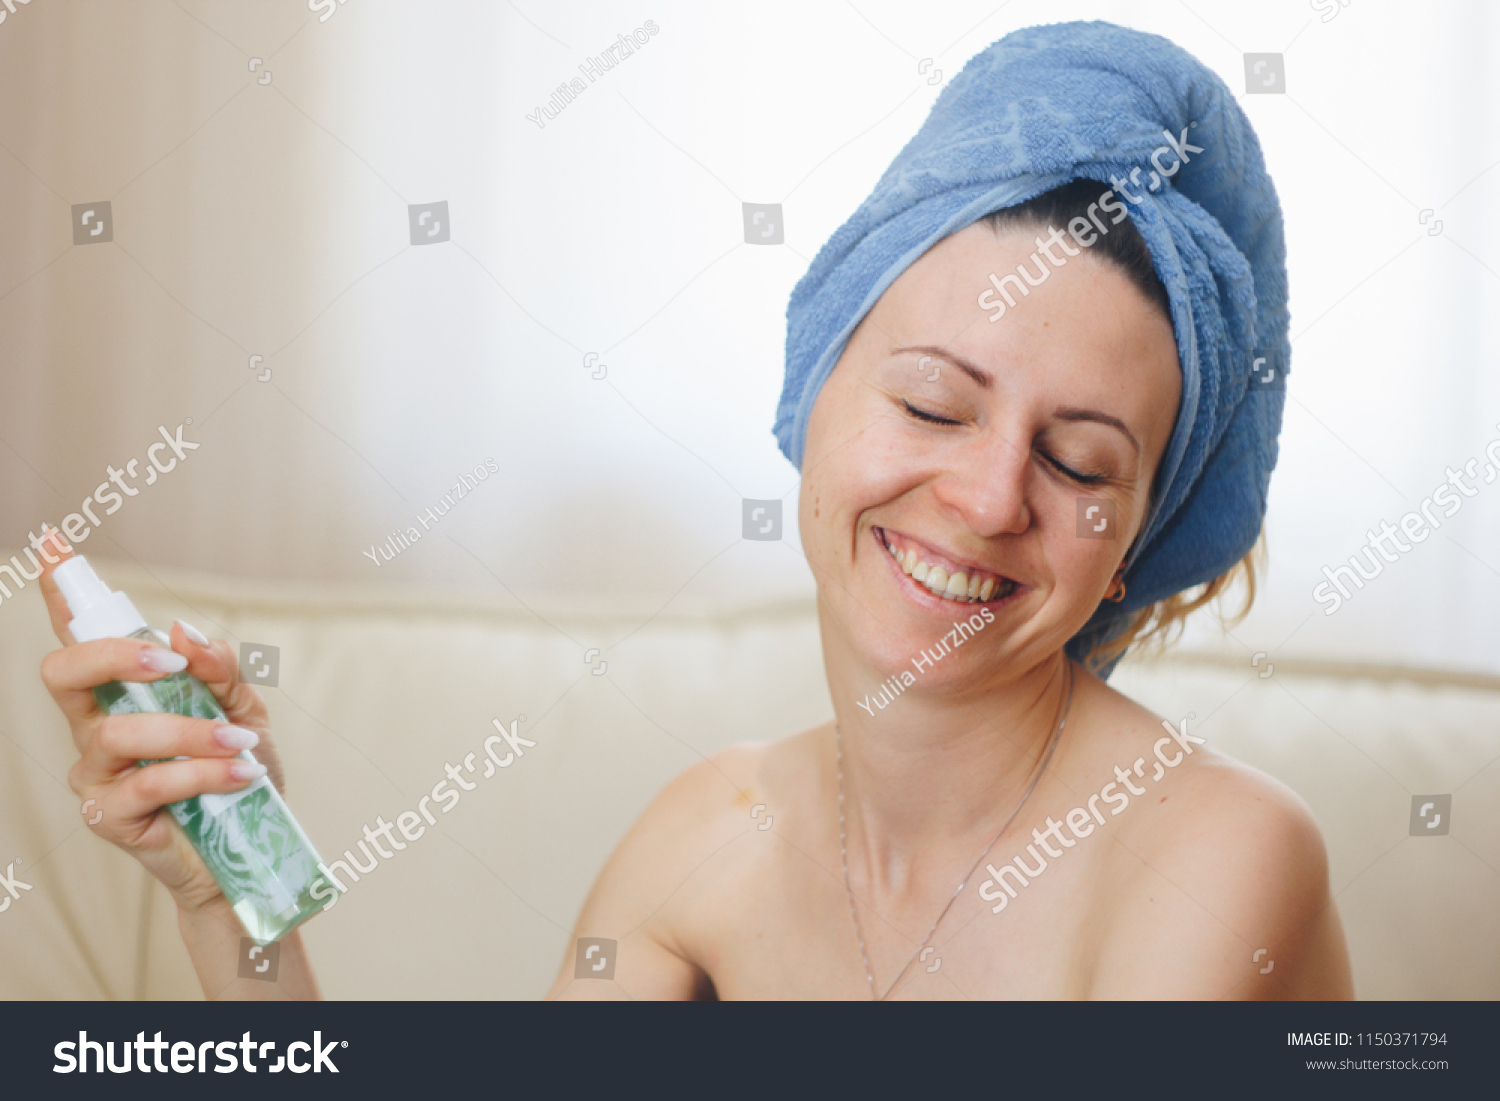 after her shower